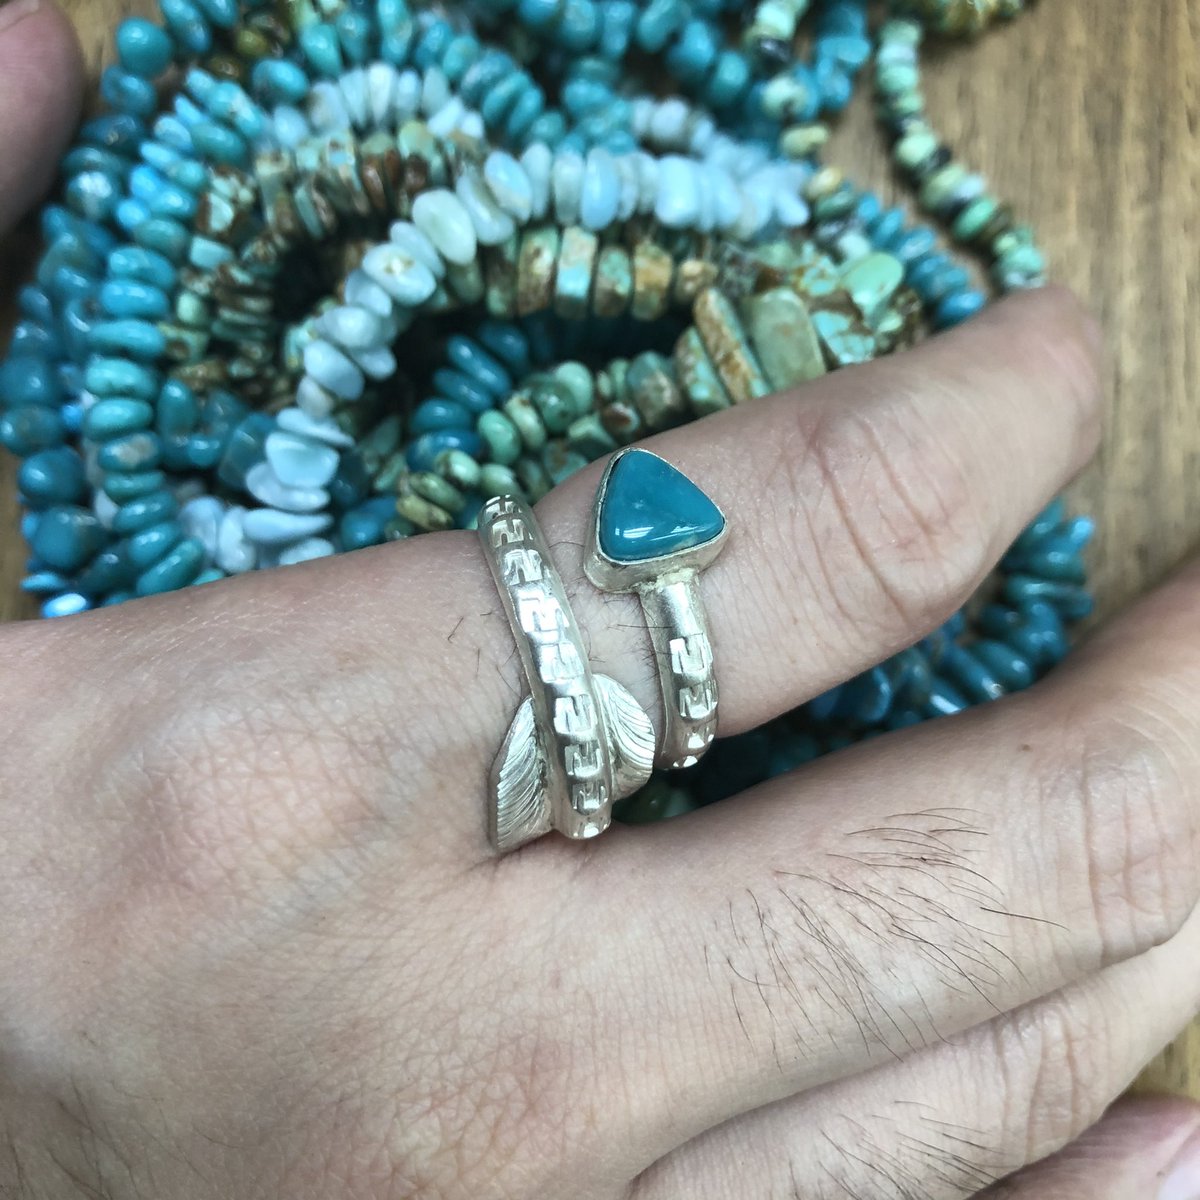 Turquoise arrow ring
#hm59 #xhm59x #handmadeinhongkong #silversmithinhongkong #turquoise #nativeamericaninspired